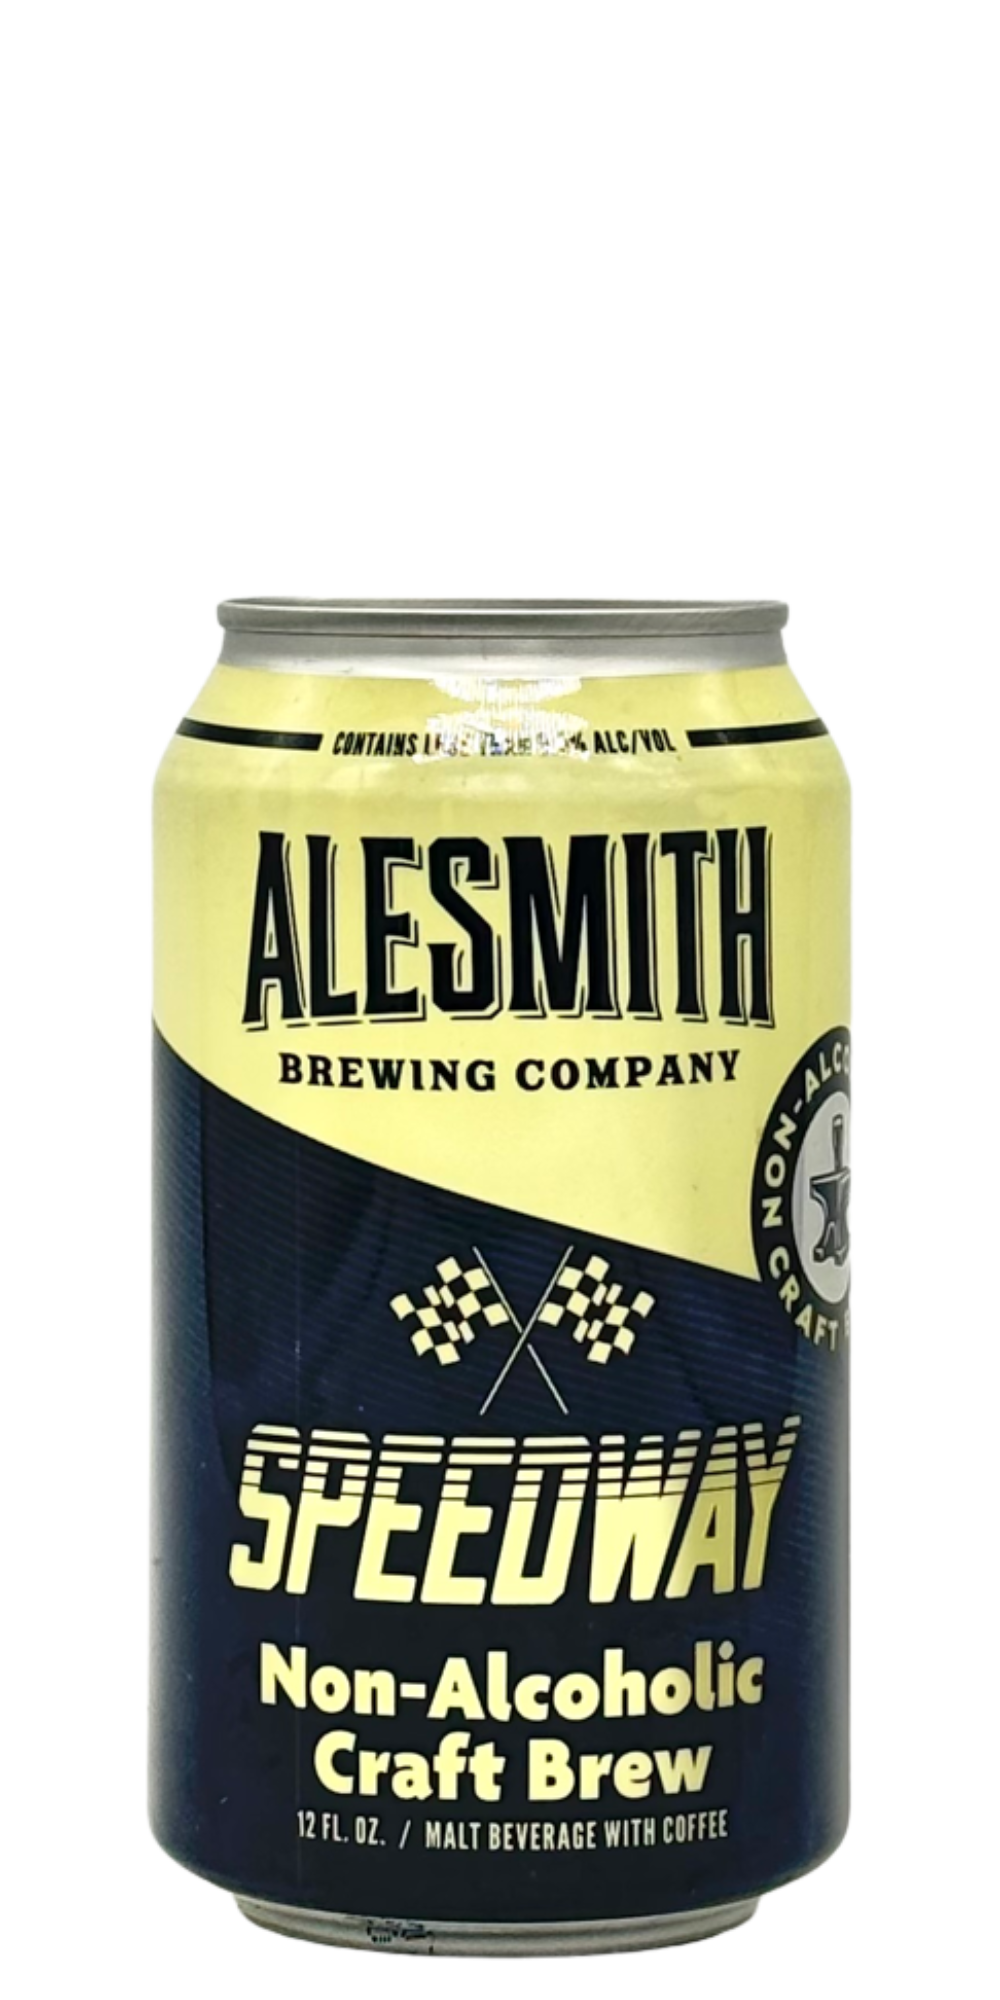 Alesmith - Speedway - Non-Alcoholic Craft Brew